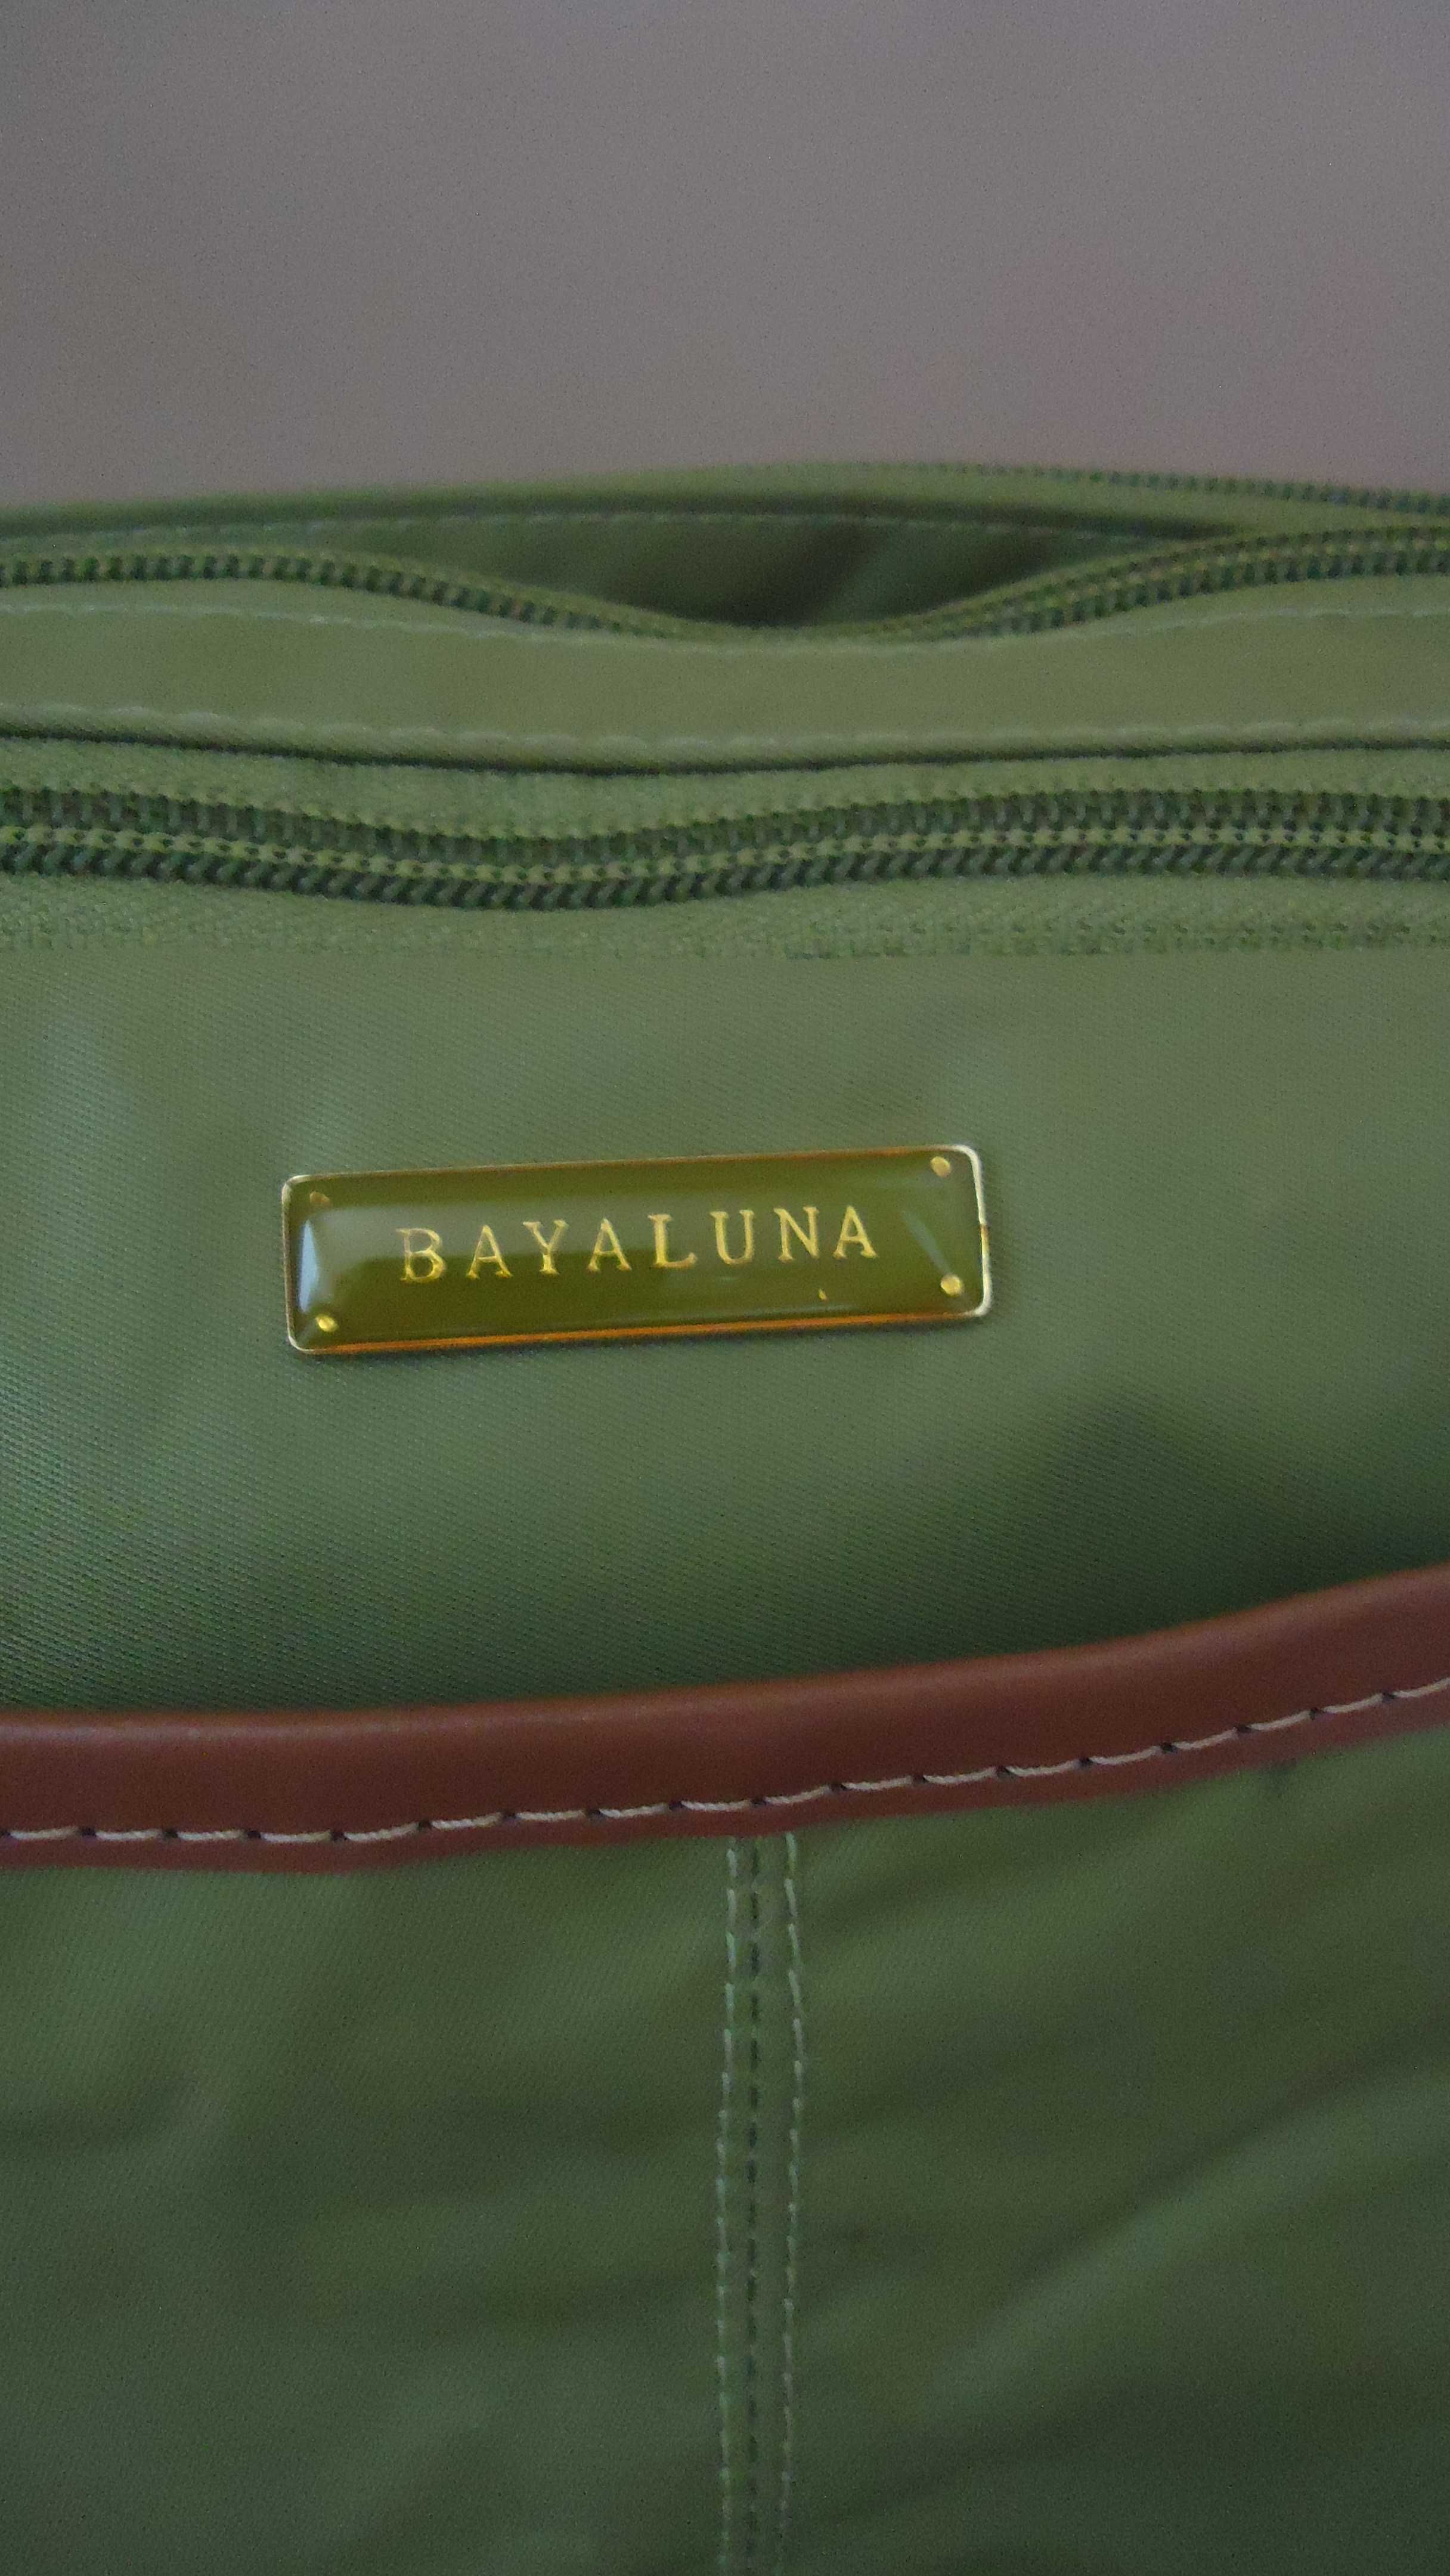 oliwkowa torebka BAYALUNA torebka zielona markowa torebka